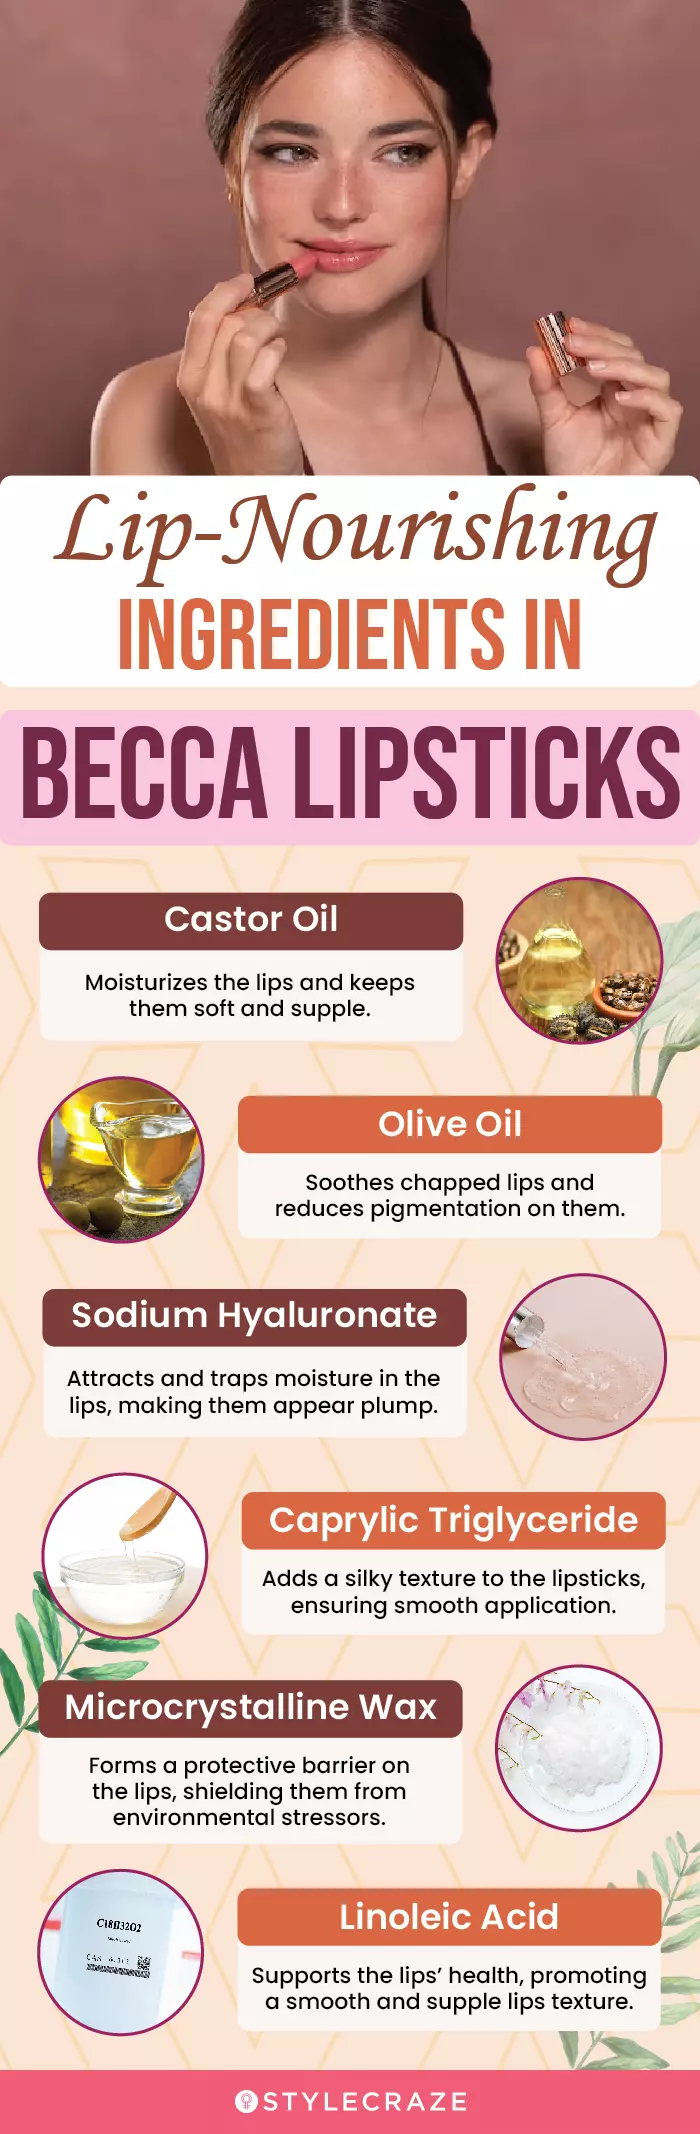 Lip-Nourishing Ingredients In Becca Lipsticks(infographic)